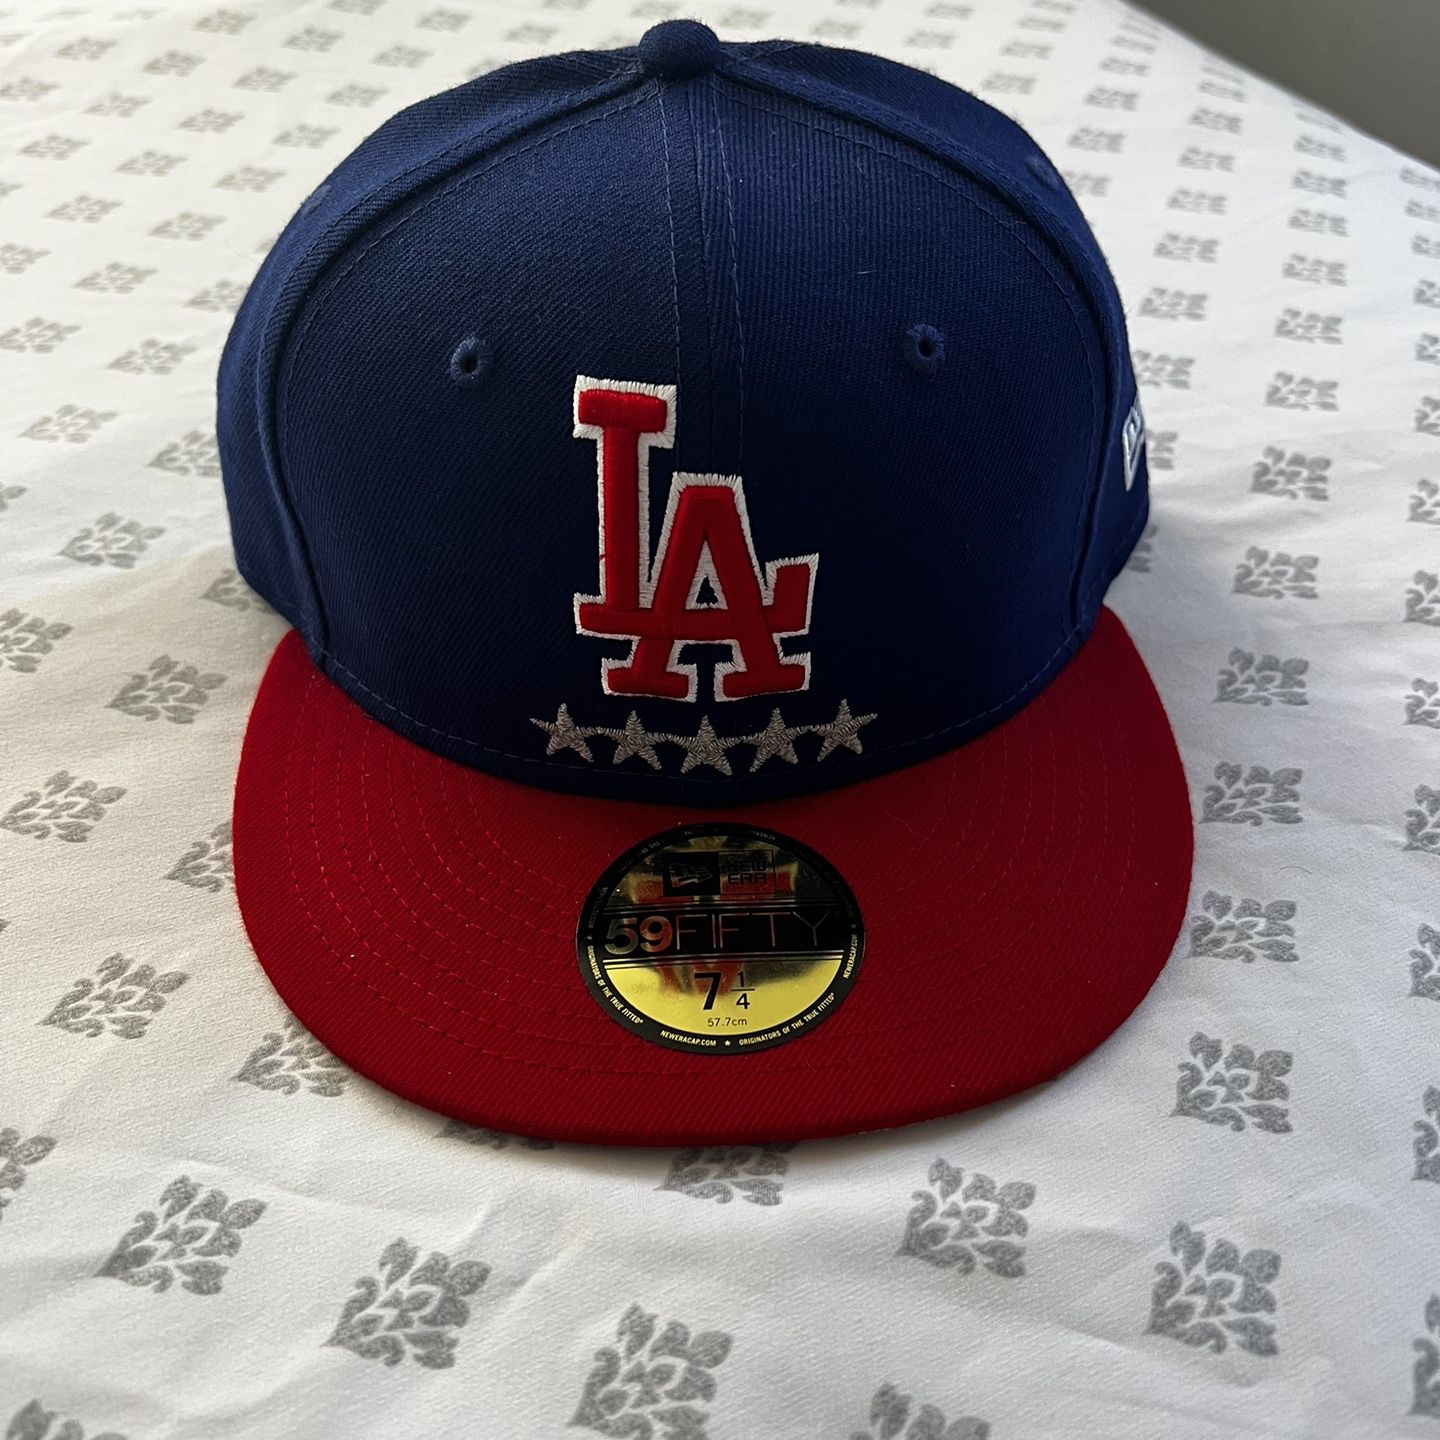 Los Tequileros de Jalisco Mesh Snapback Hat Cap Hats Mexico for Sale in  Montebello, CA - OfferUp